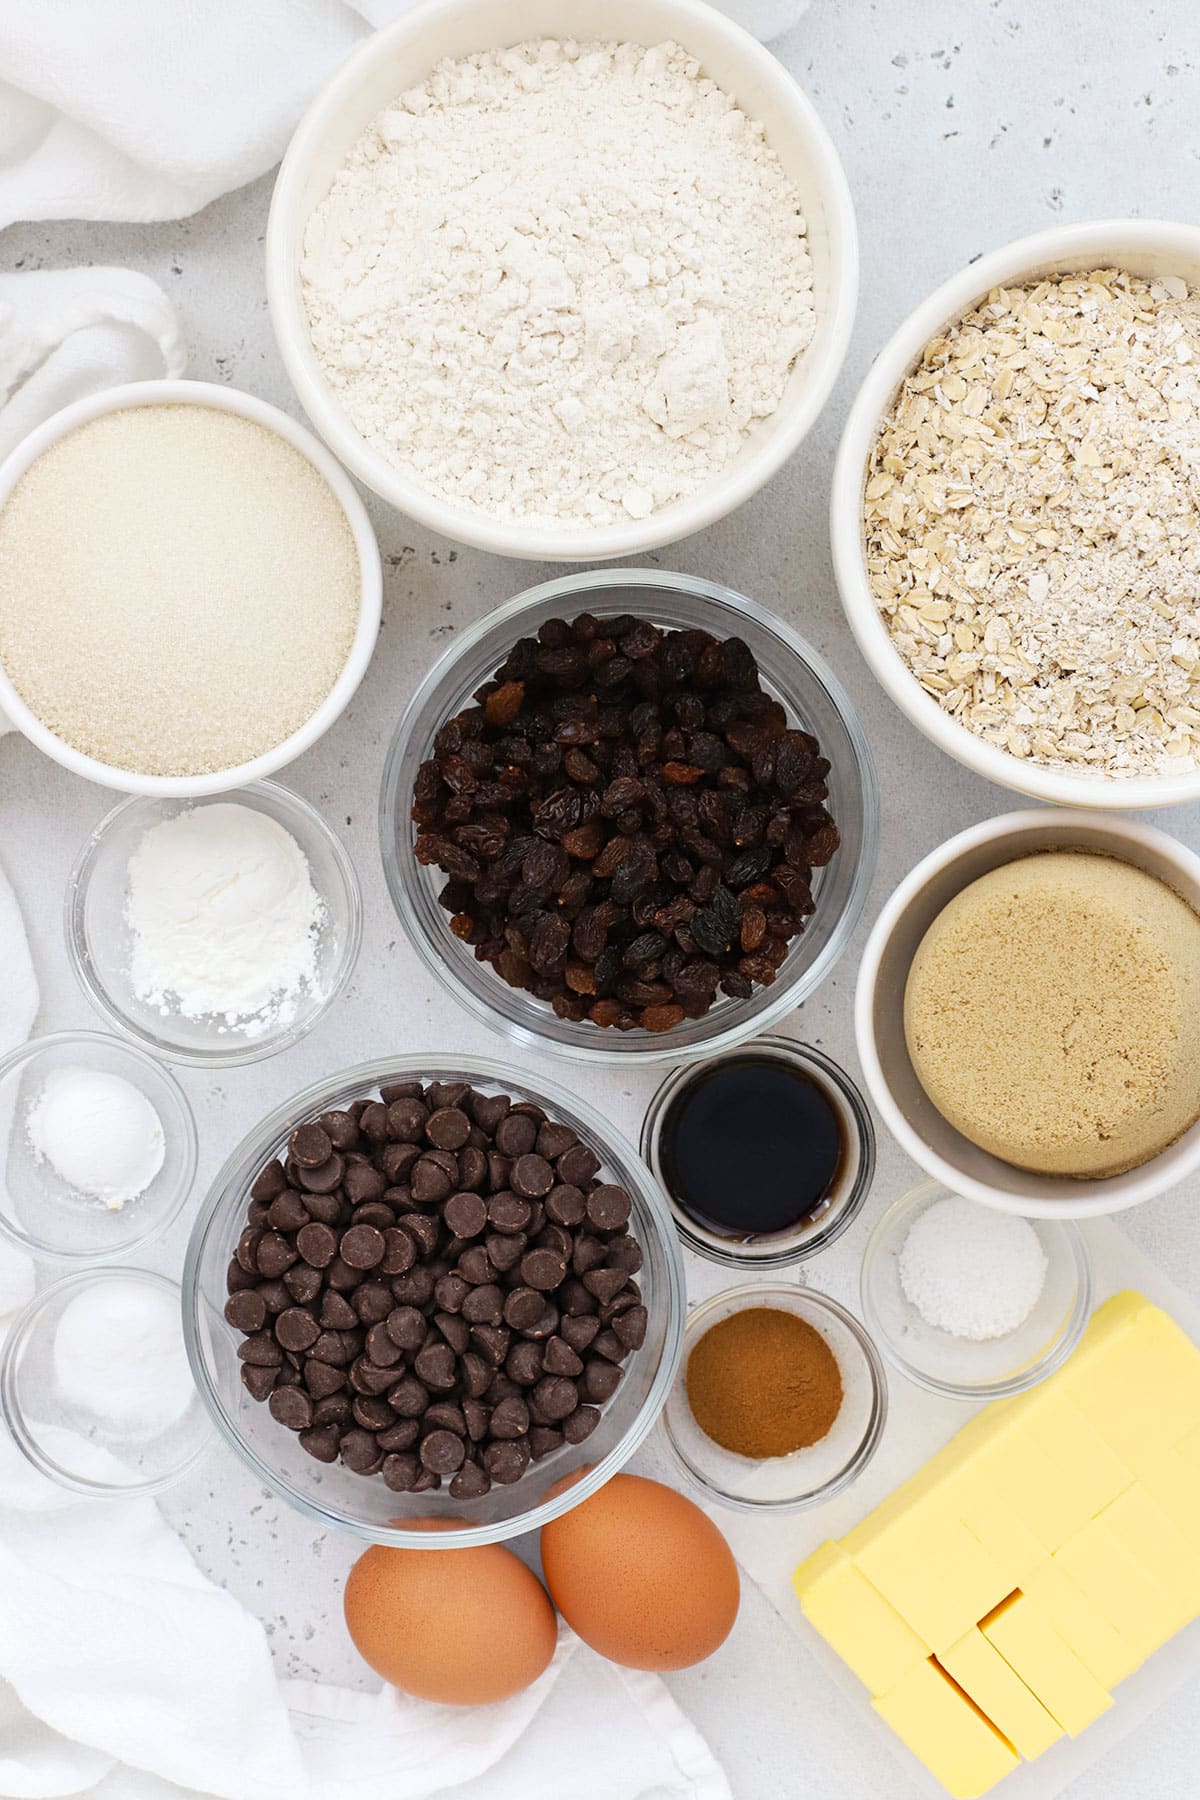 Ingredients for gluten-free oatmeal raisin cookies